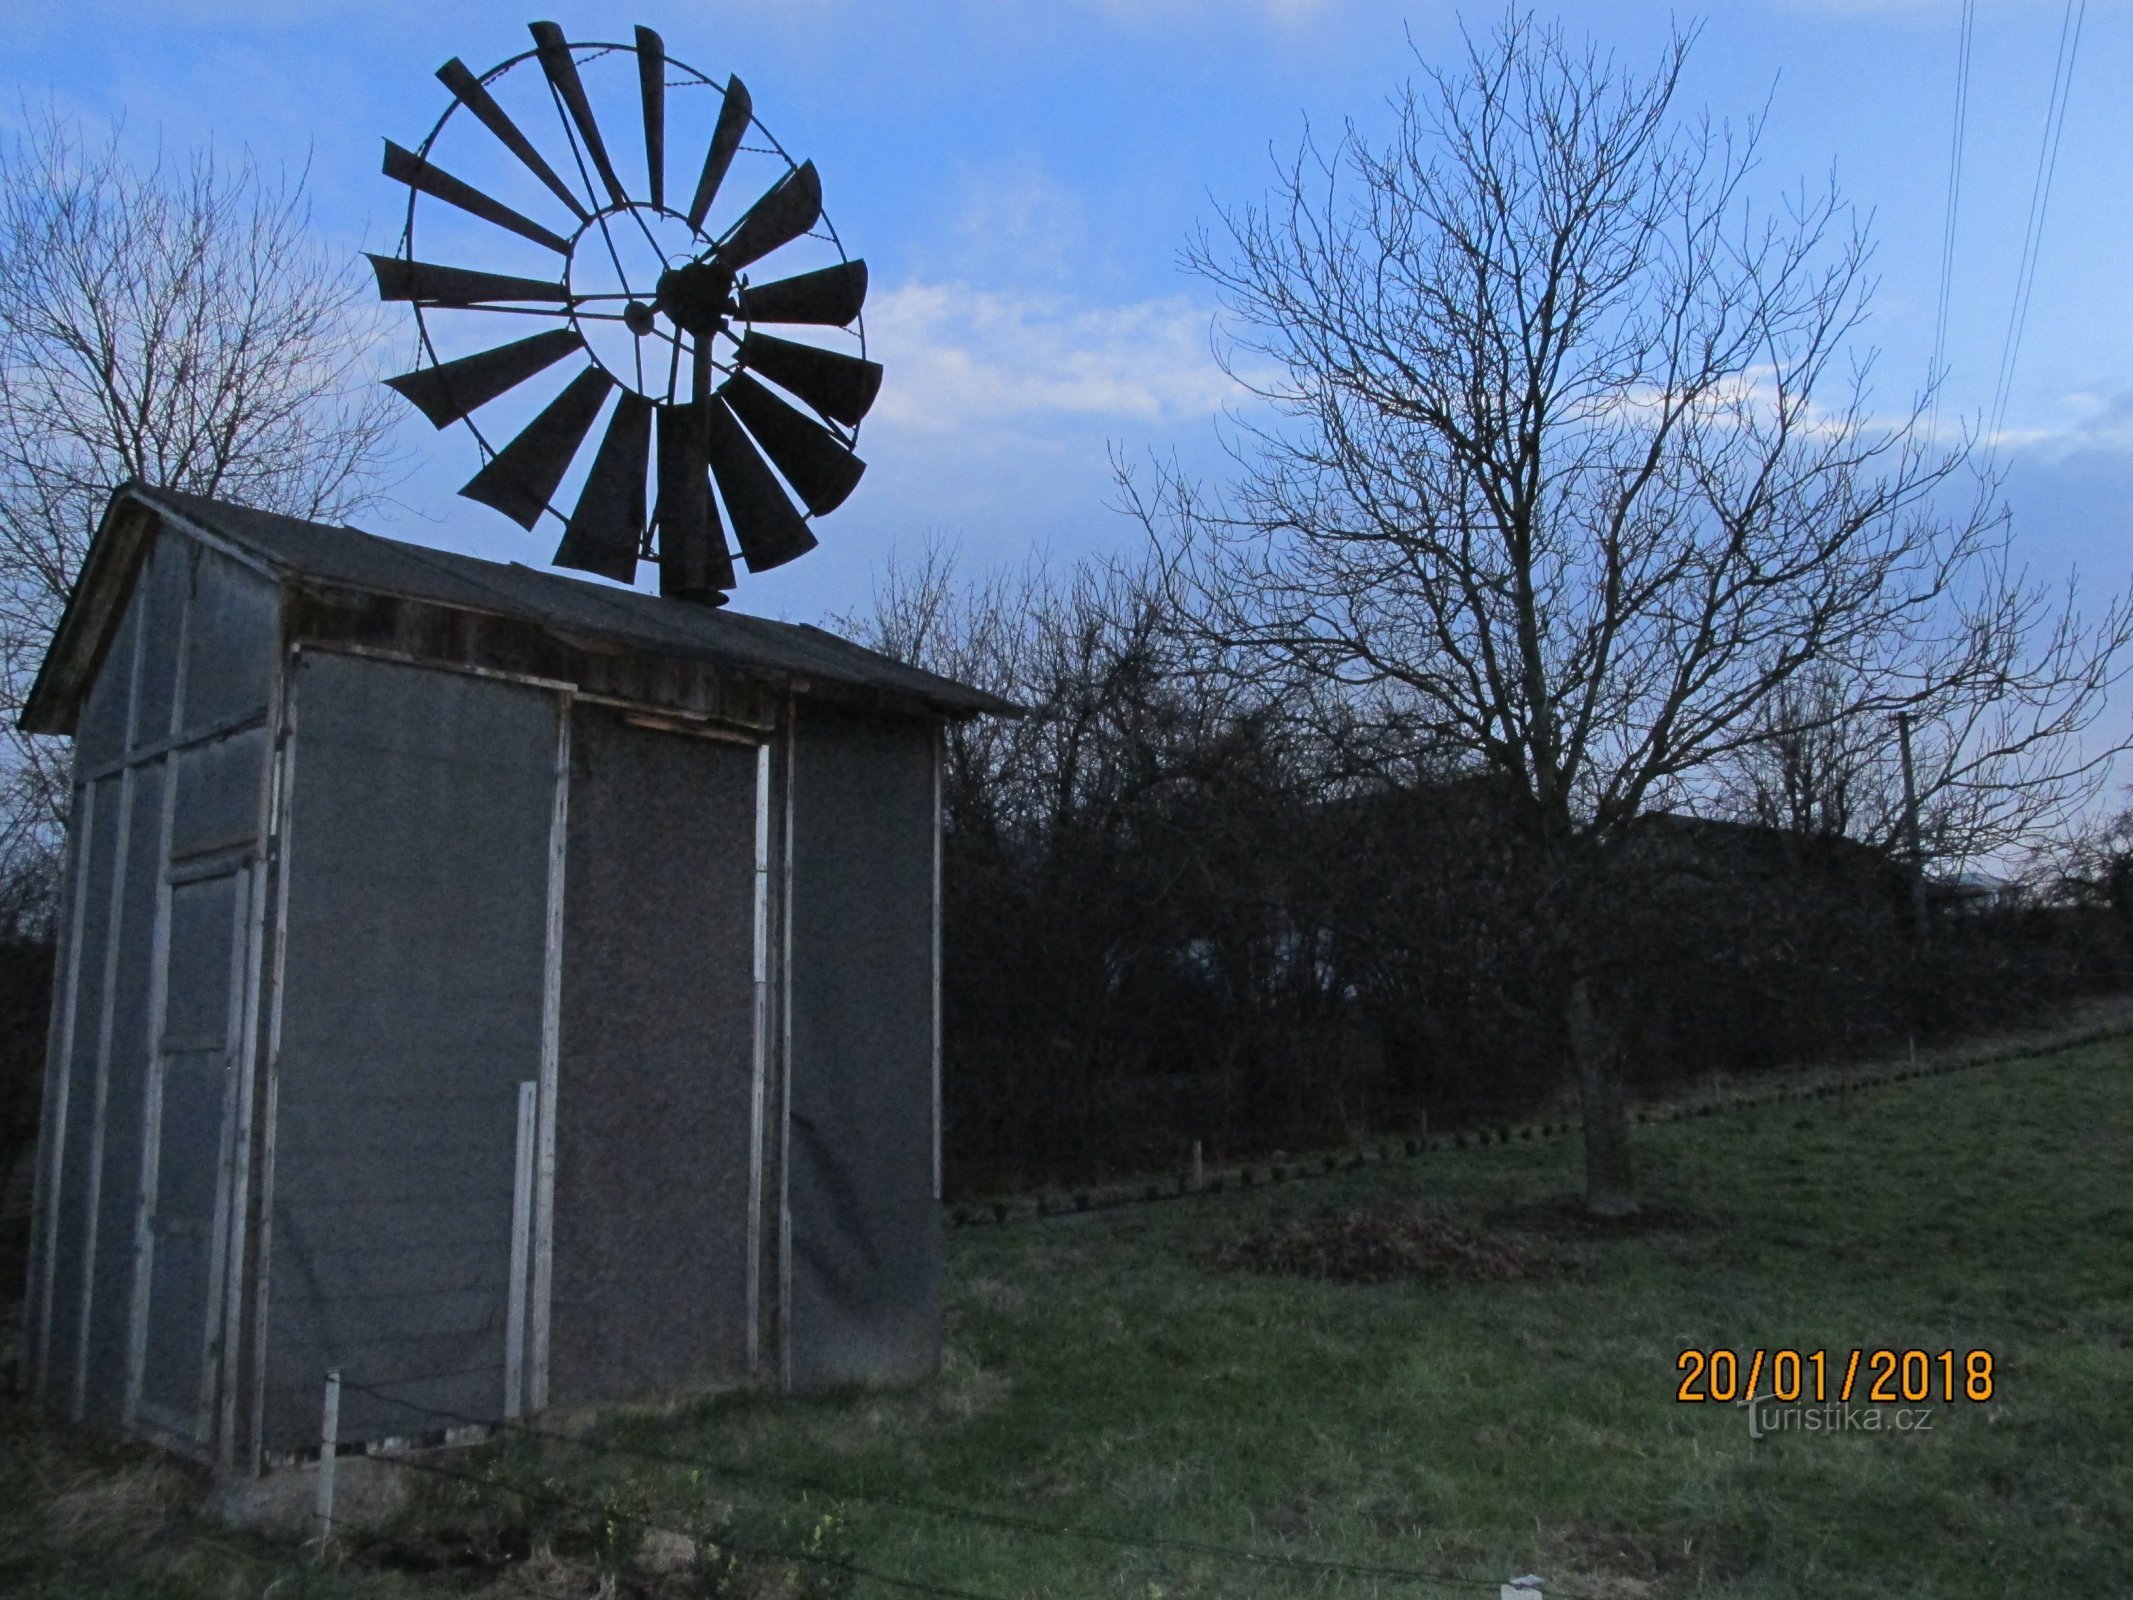 Windmill with a turbine in Havířov